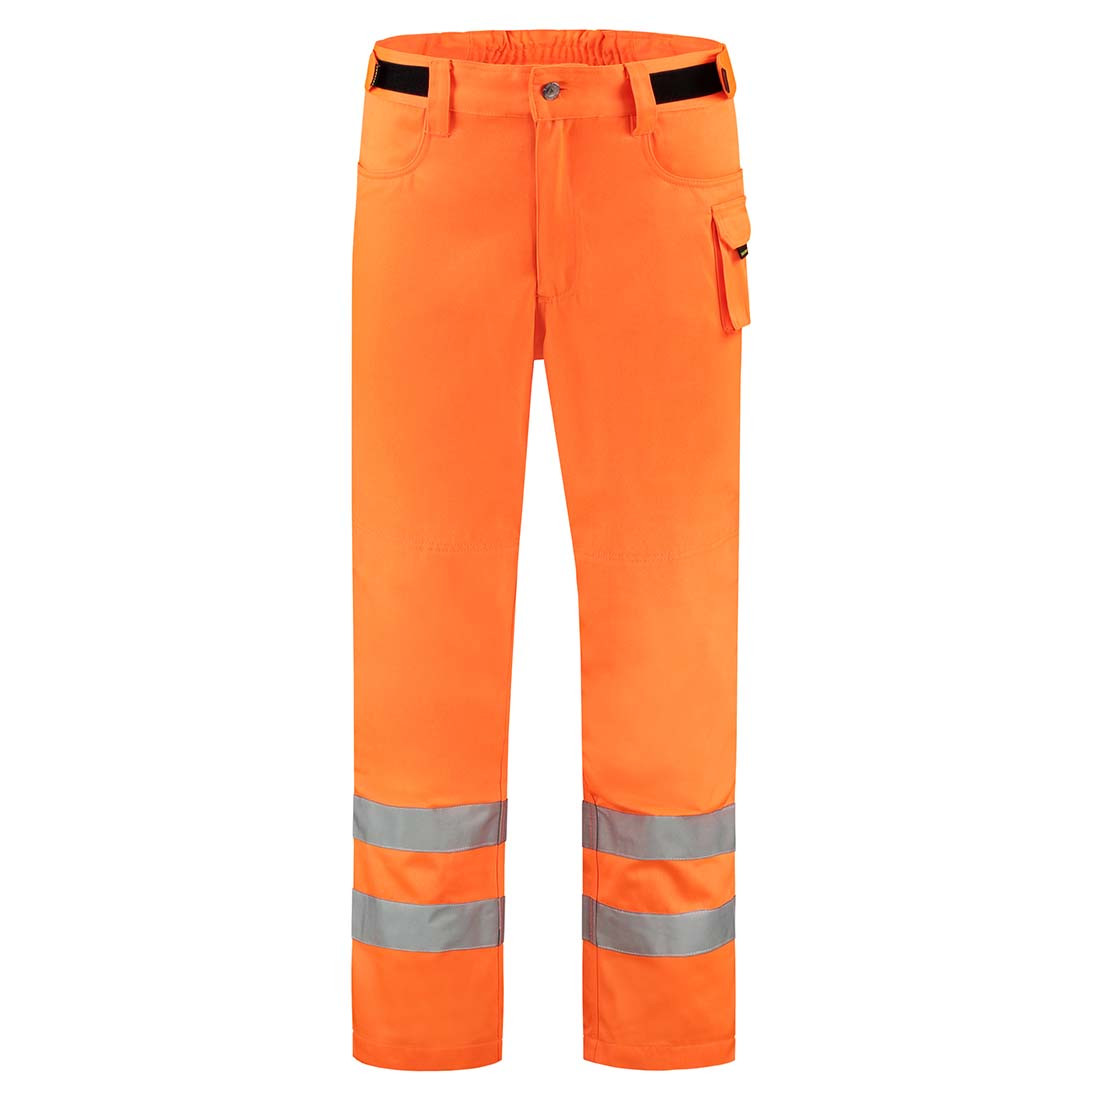 Pantalón de trabajo reflectante unisex - Ropa de protección